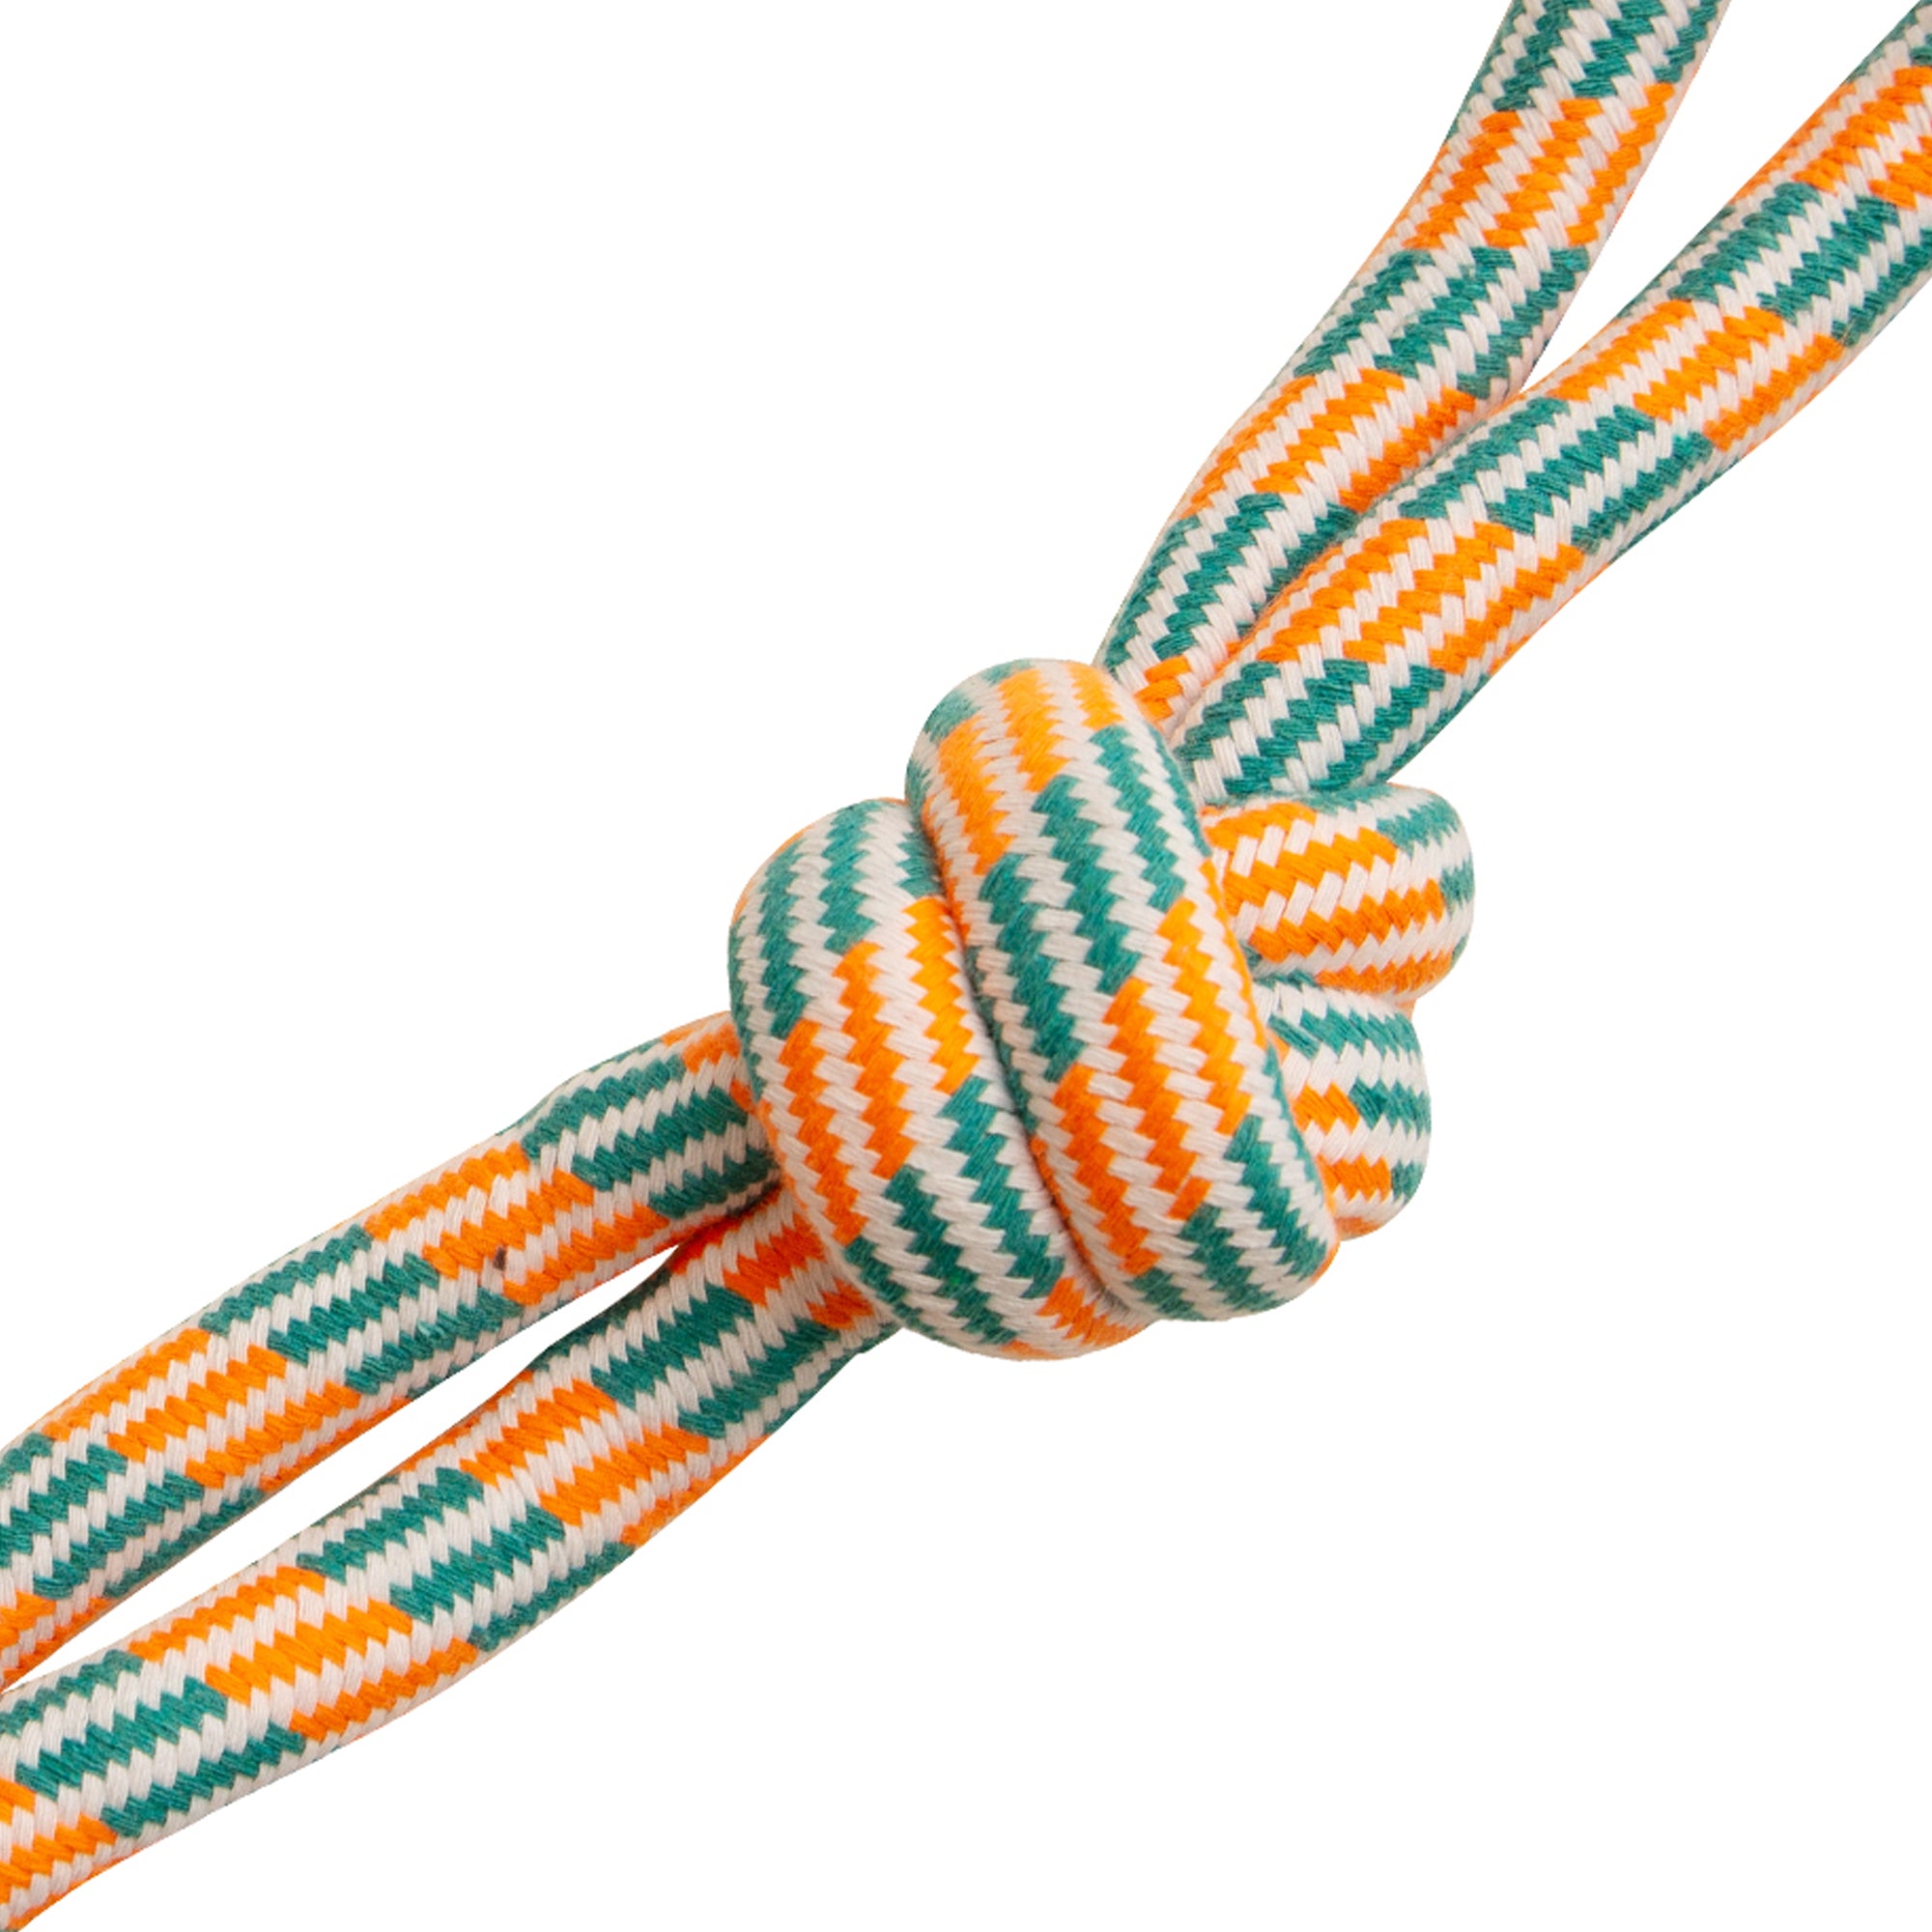 SnugArooz Fling 'N Floss dog toy; a close up of a rope